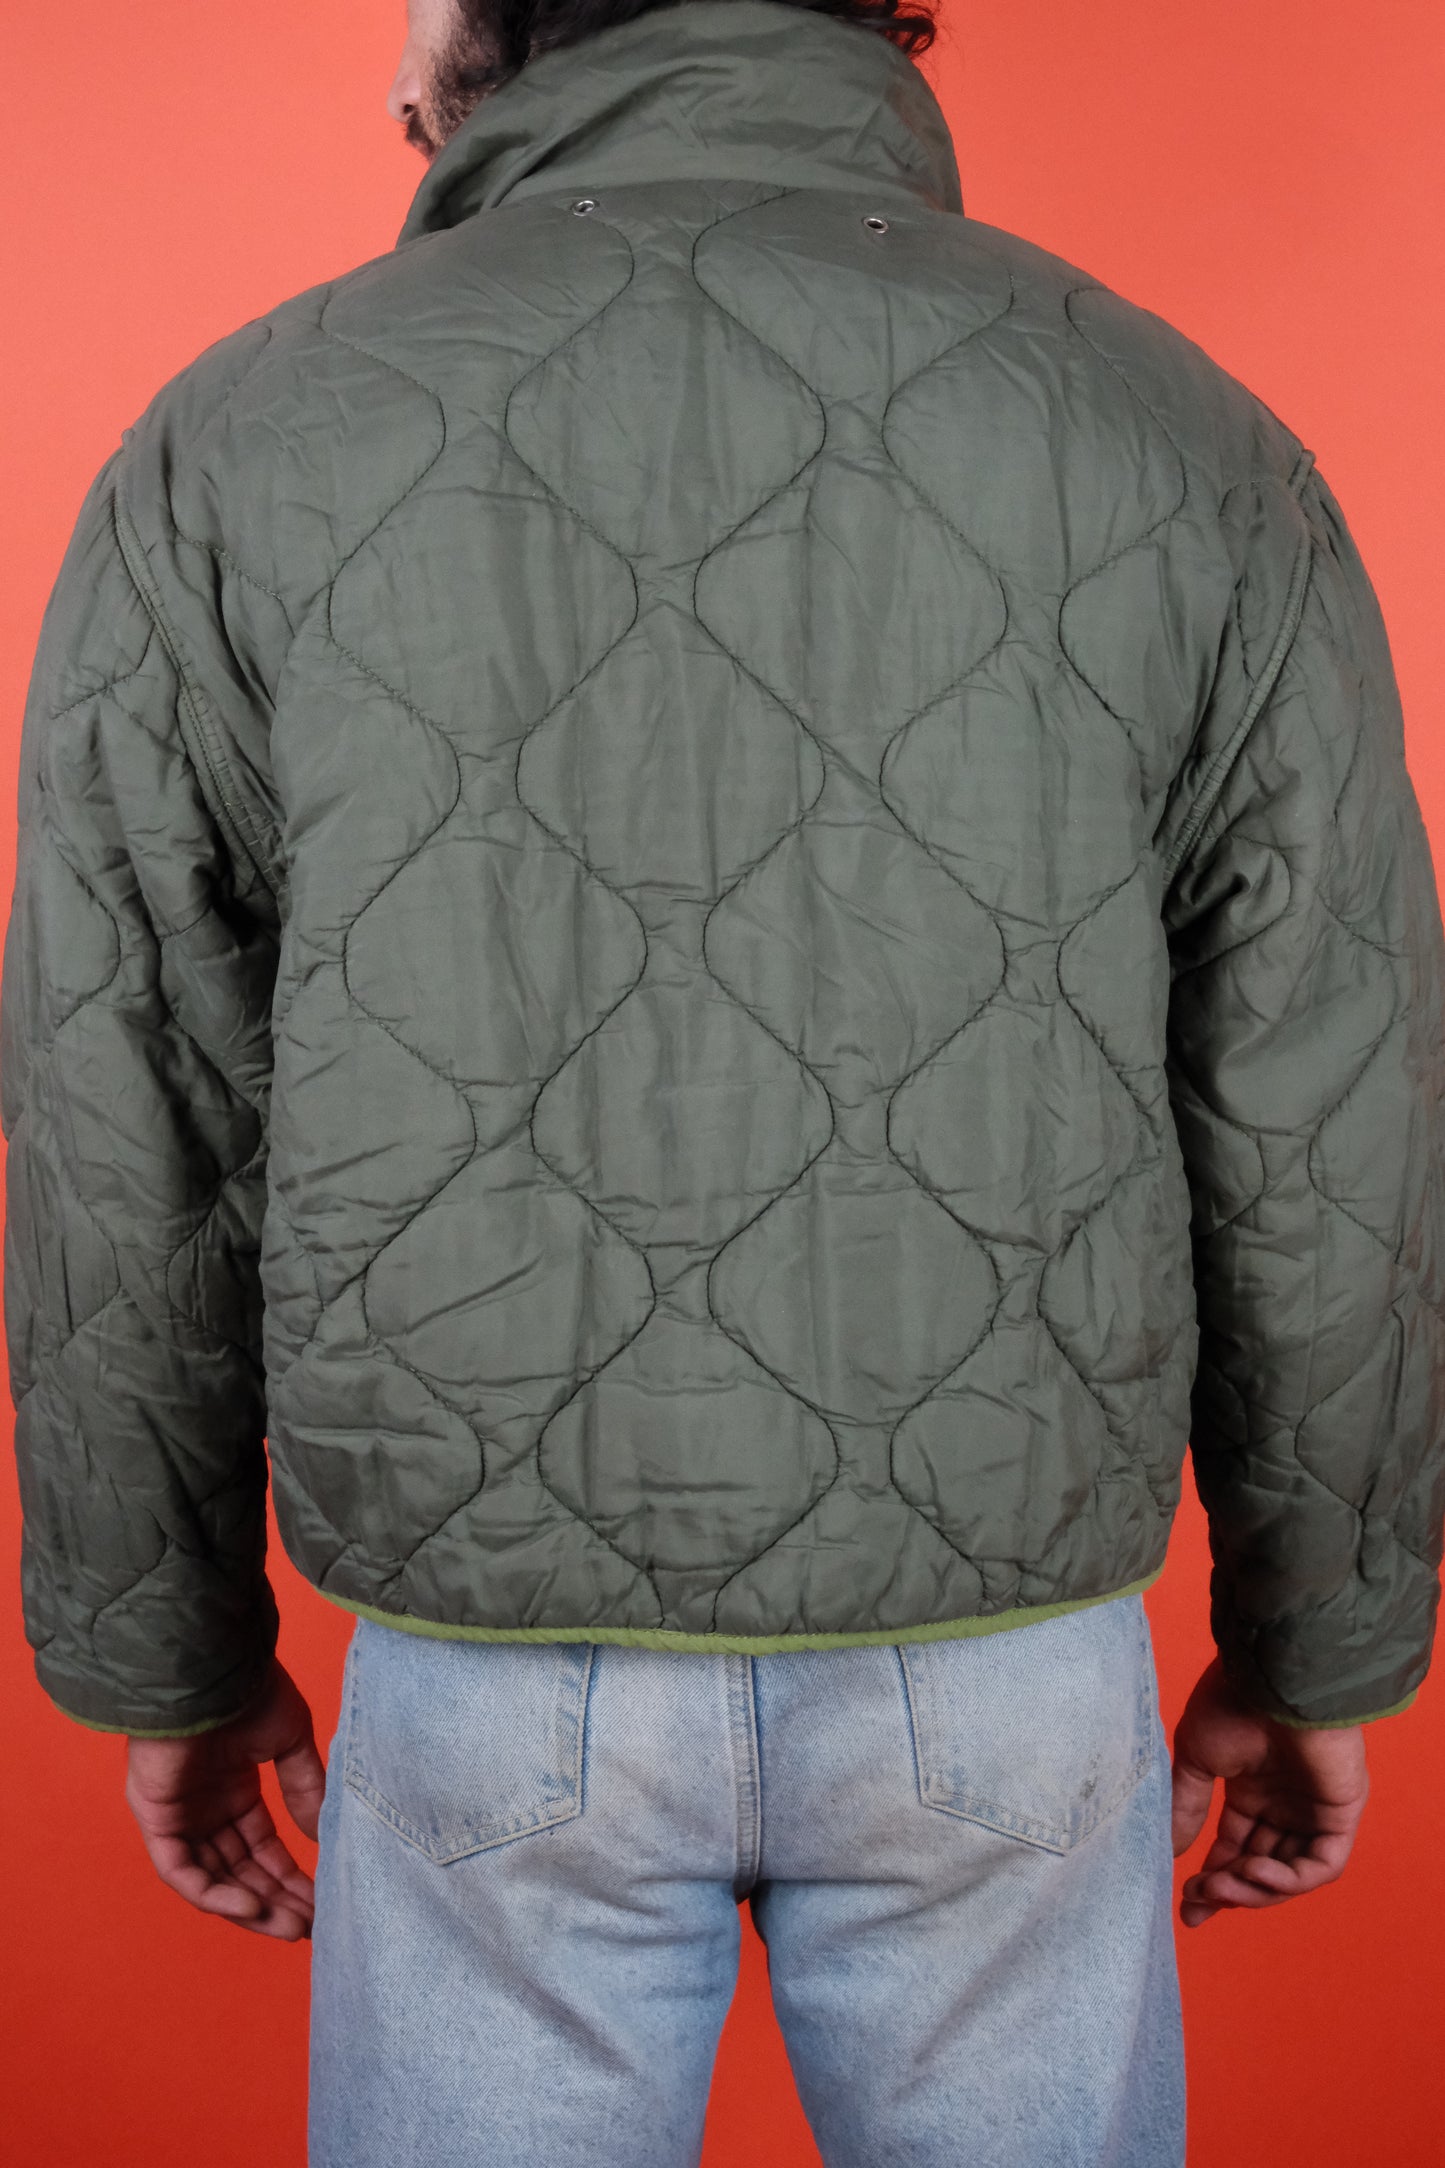 Stone Island Liner Jacket - vintage clothing clochard92.com